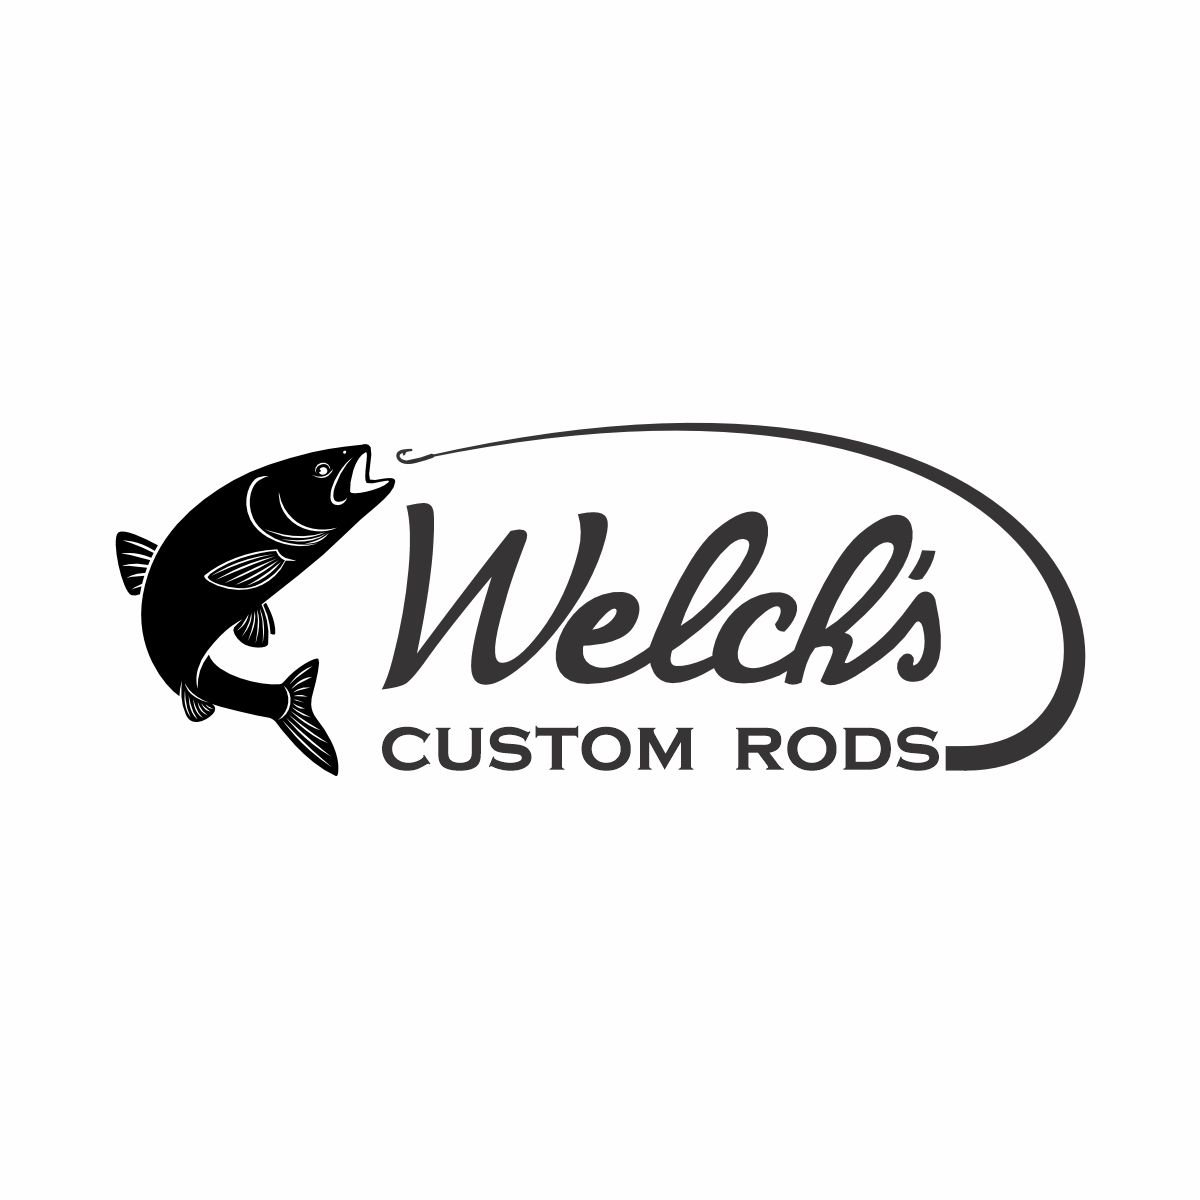 Welch's Custom Rods logo